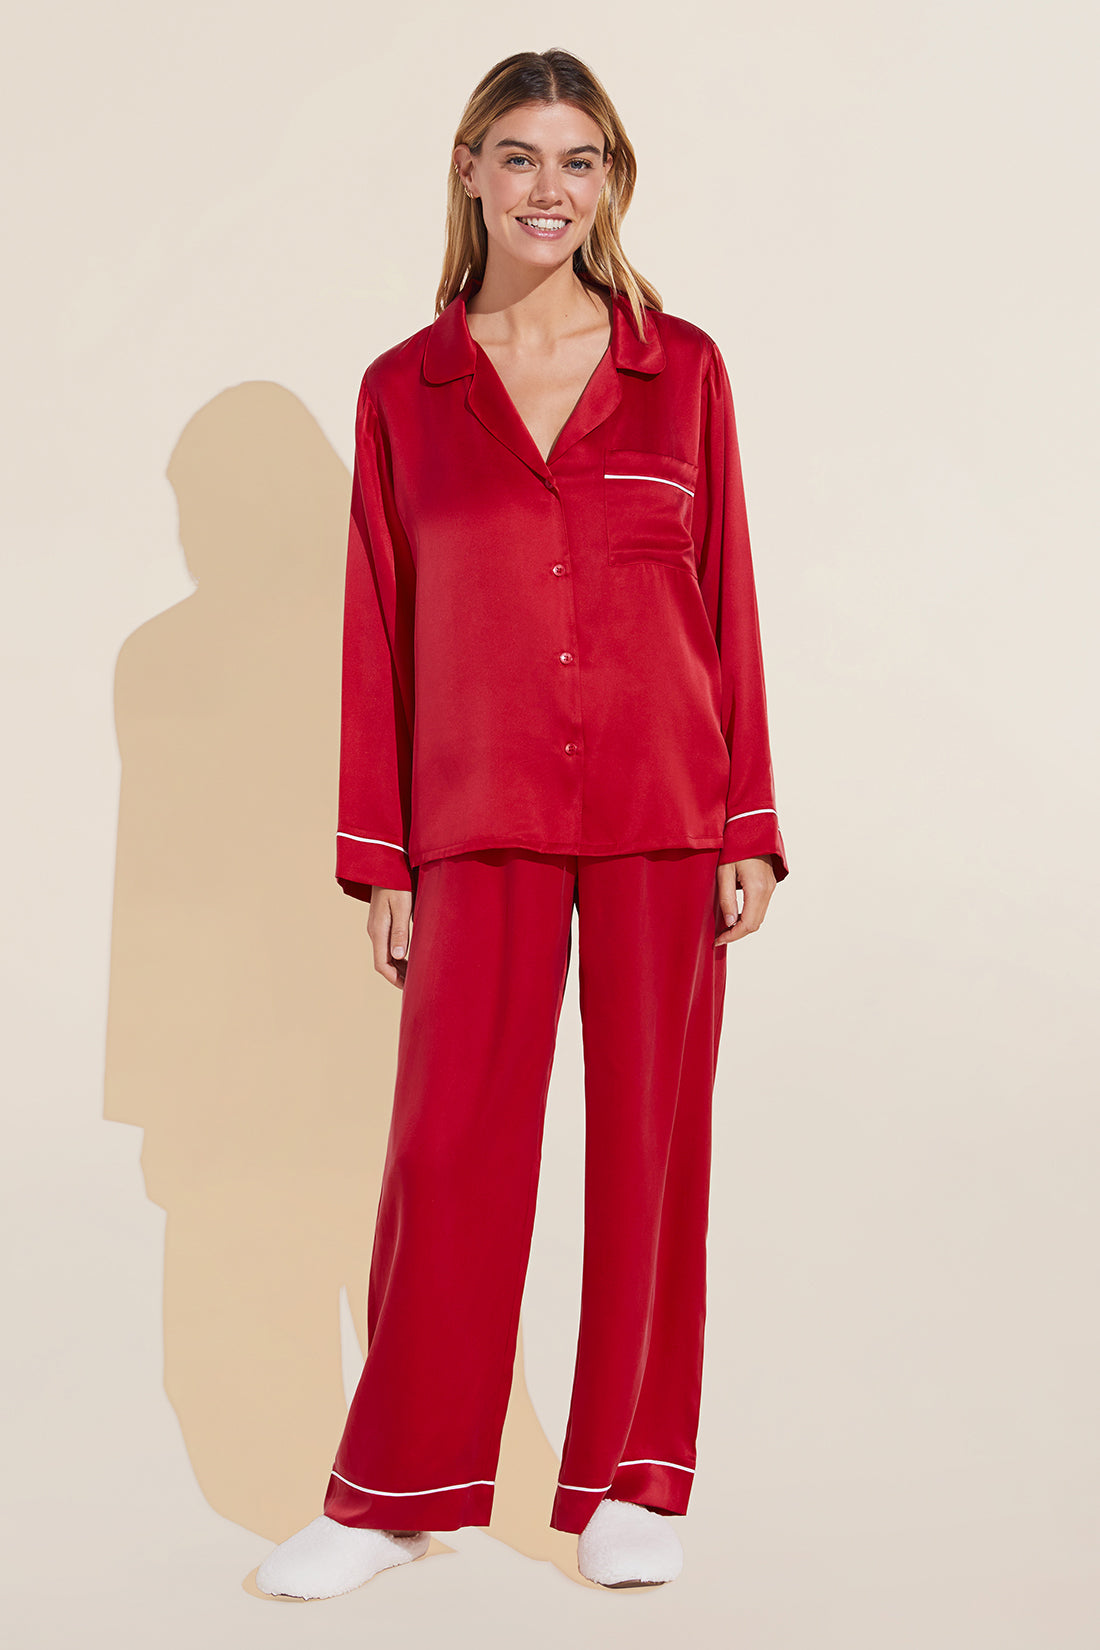 Silk Pajama Sets High Quality – The house of Braid